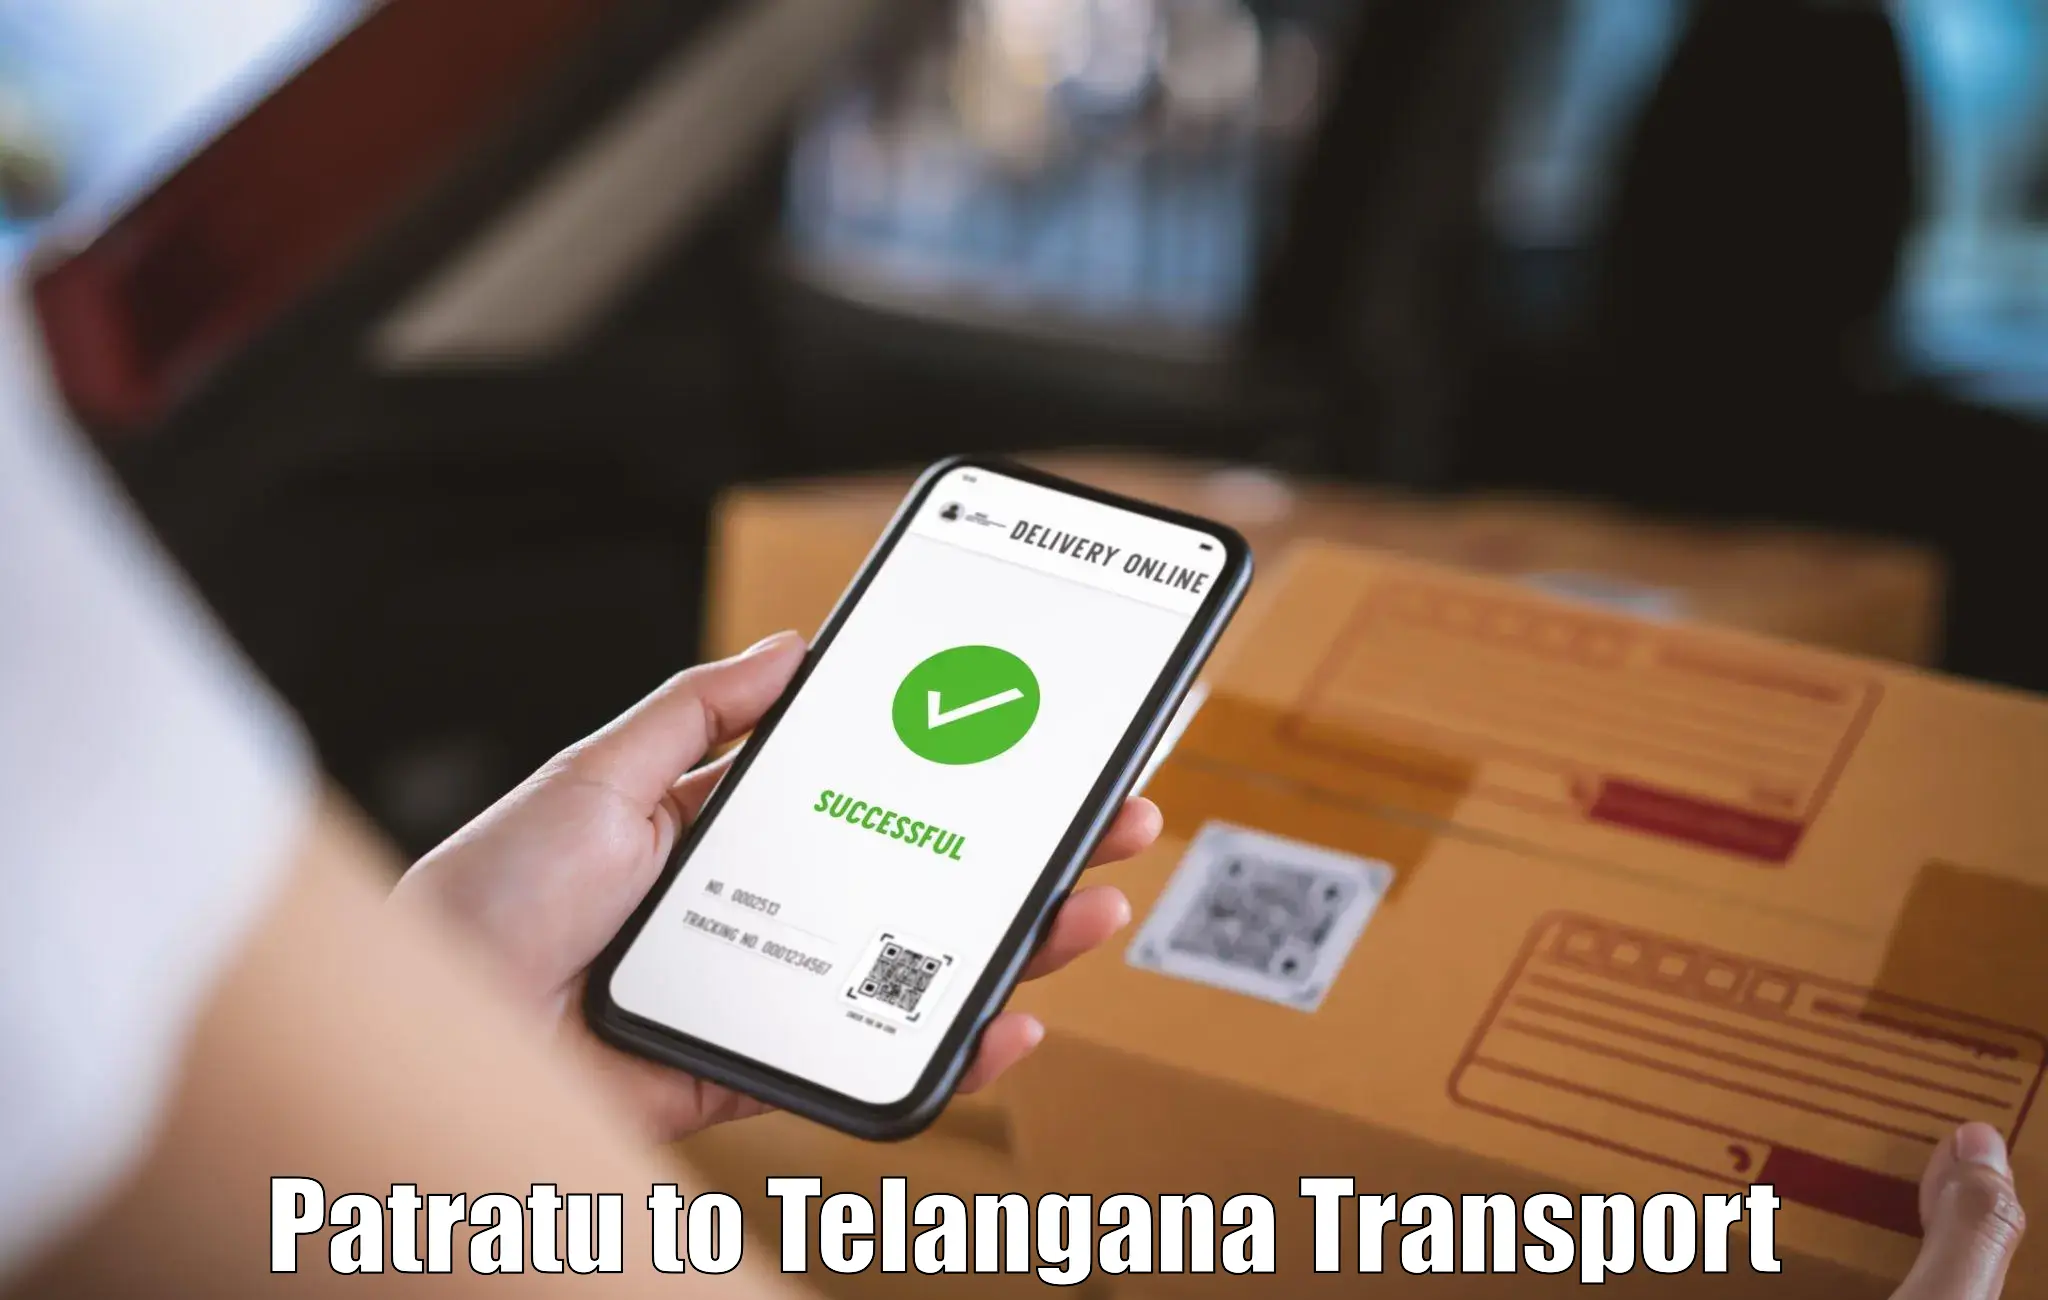 Transport in sharing Patratu to Telangana